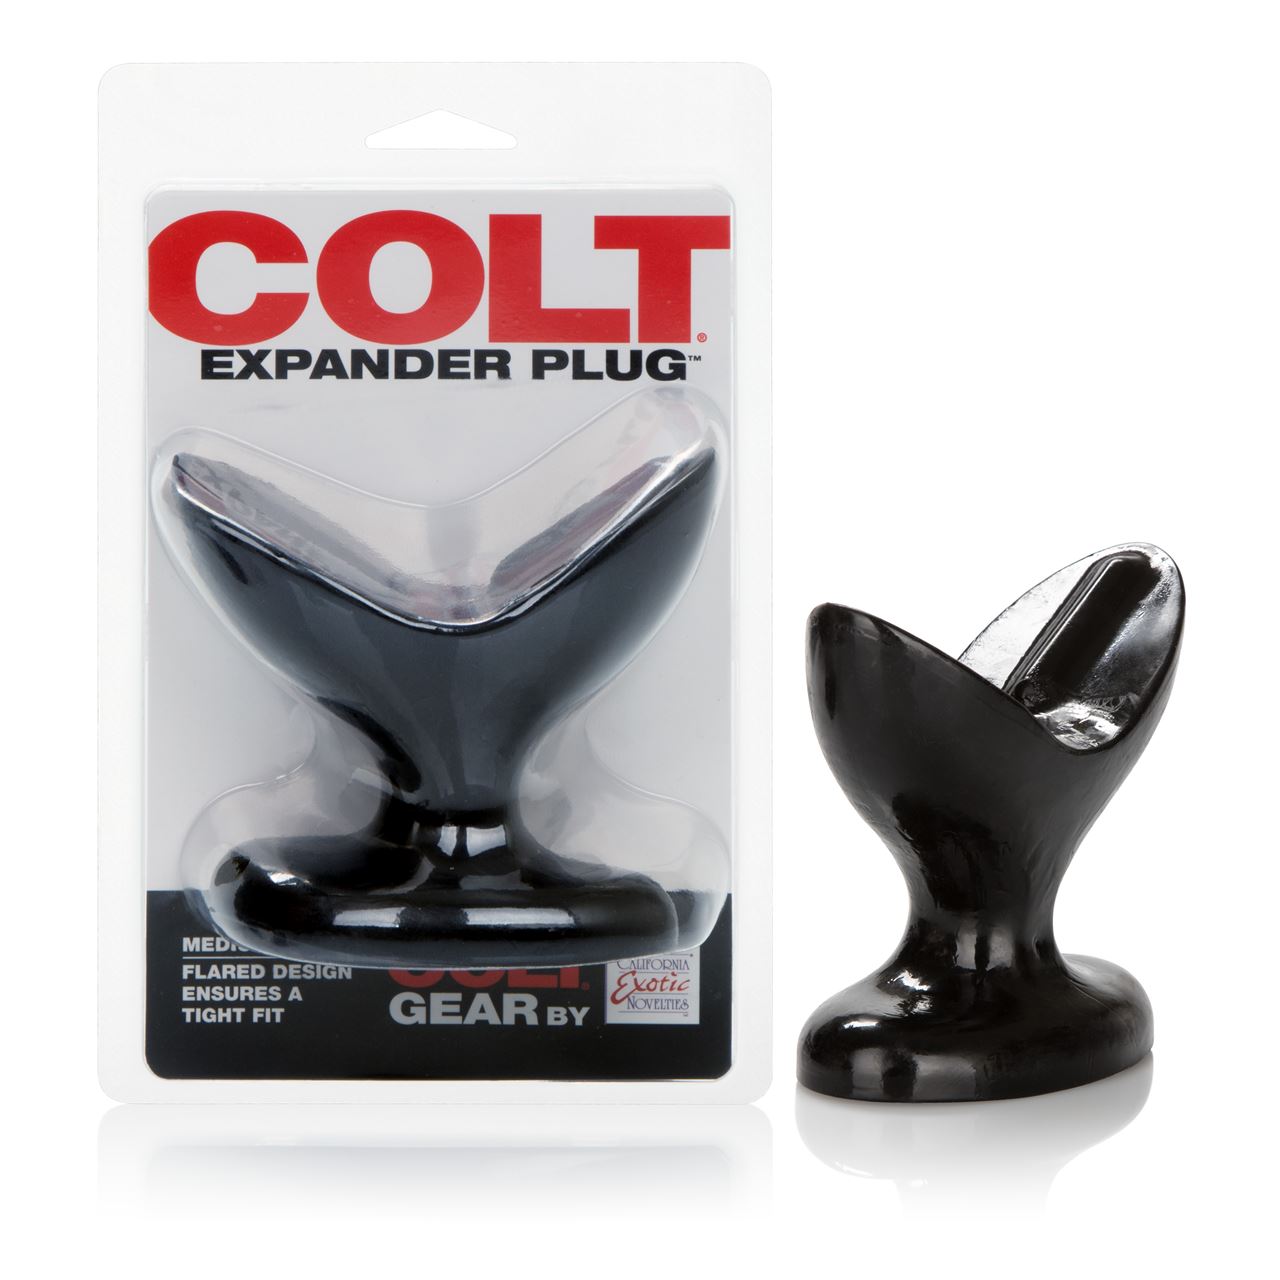 COLT Expander Plug - Medium